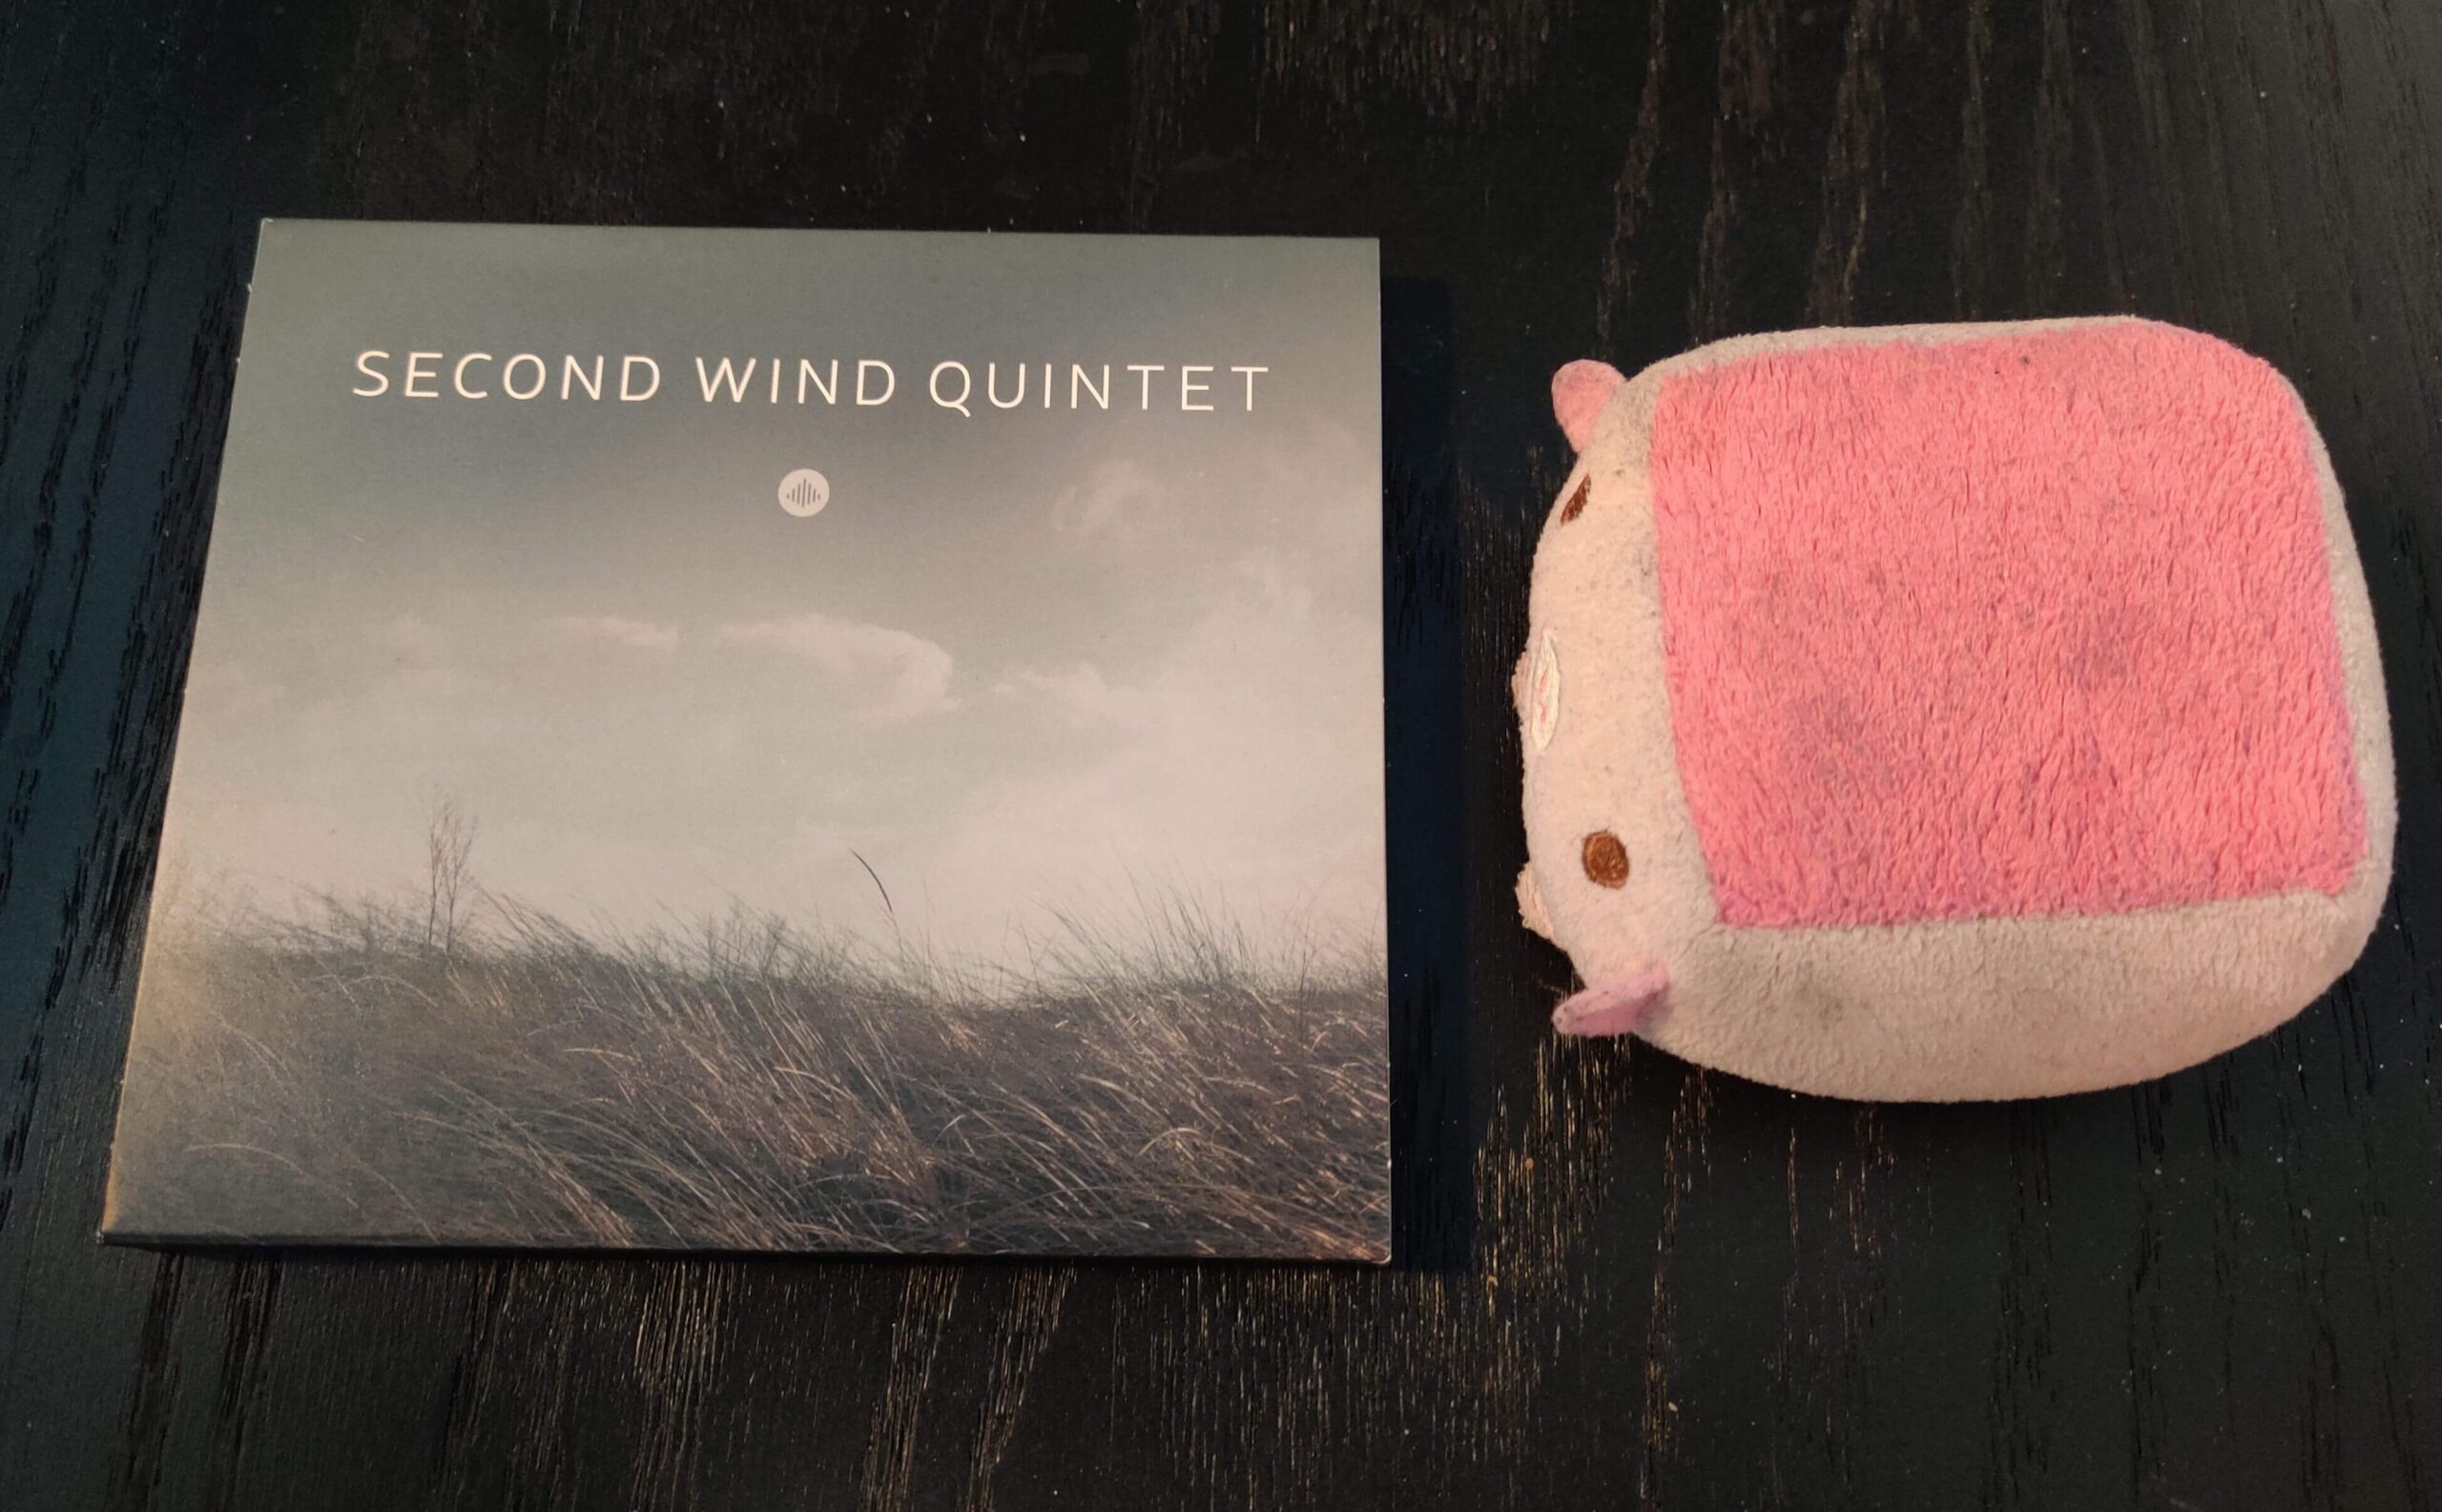 Second Wind Quintet – Second Wind Quintet